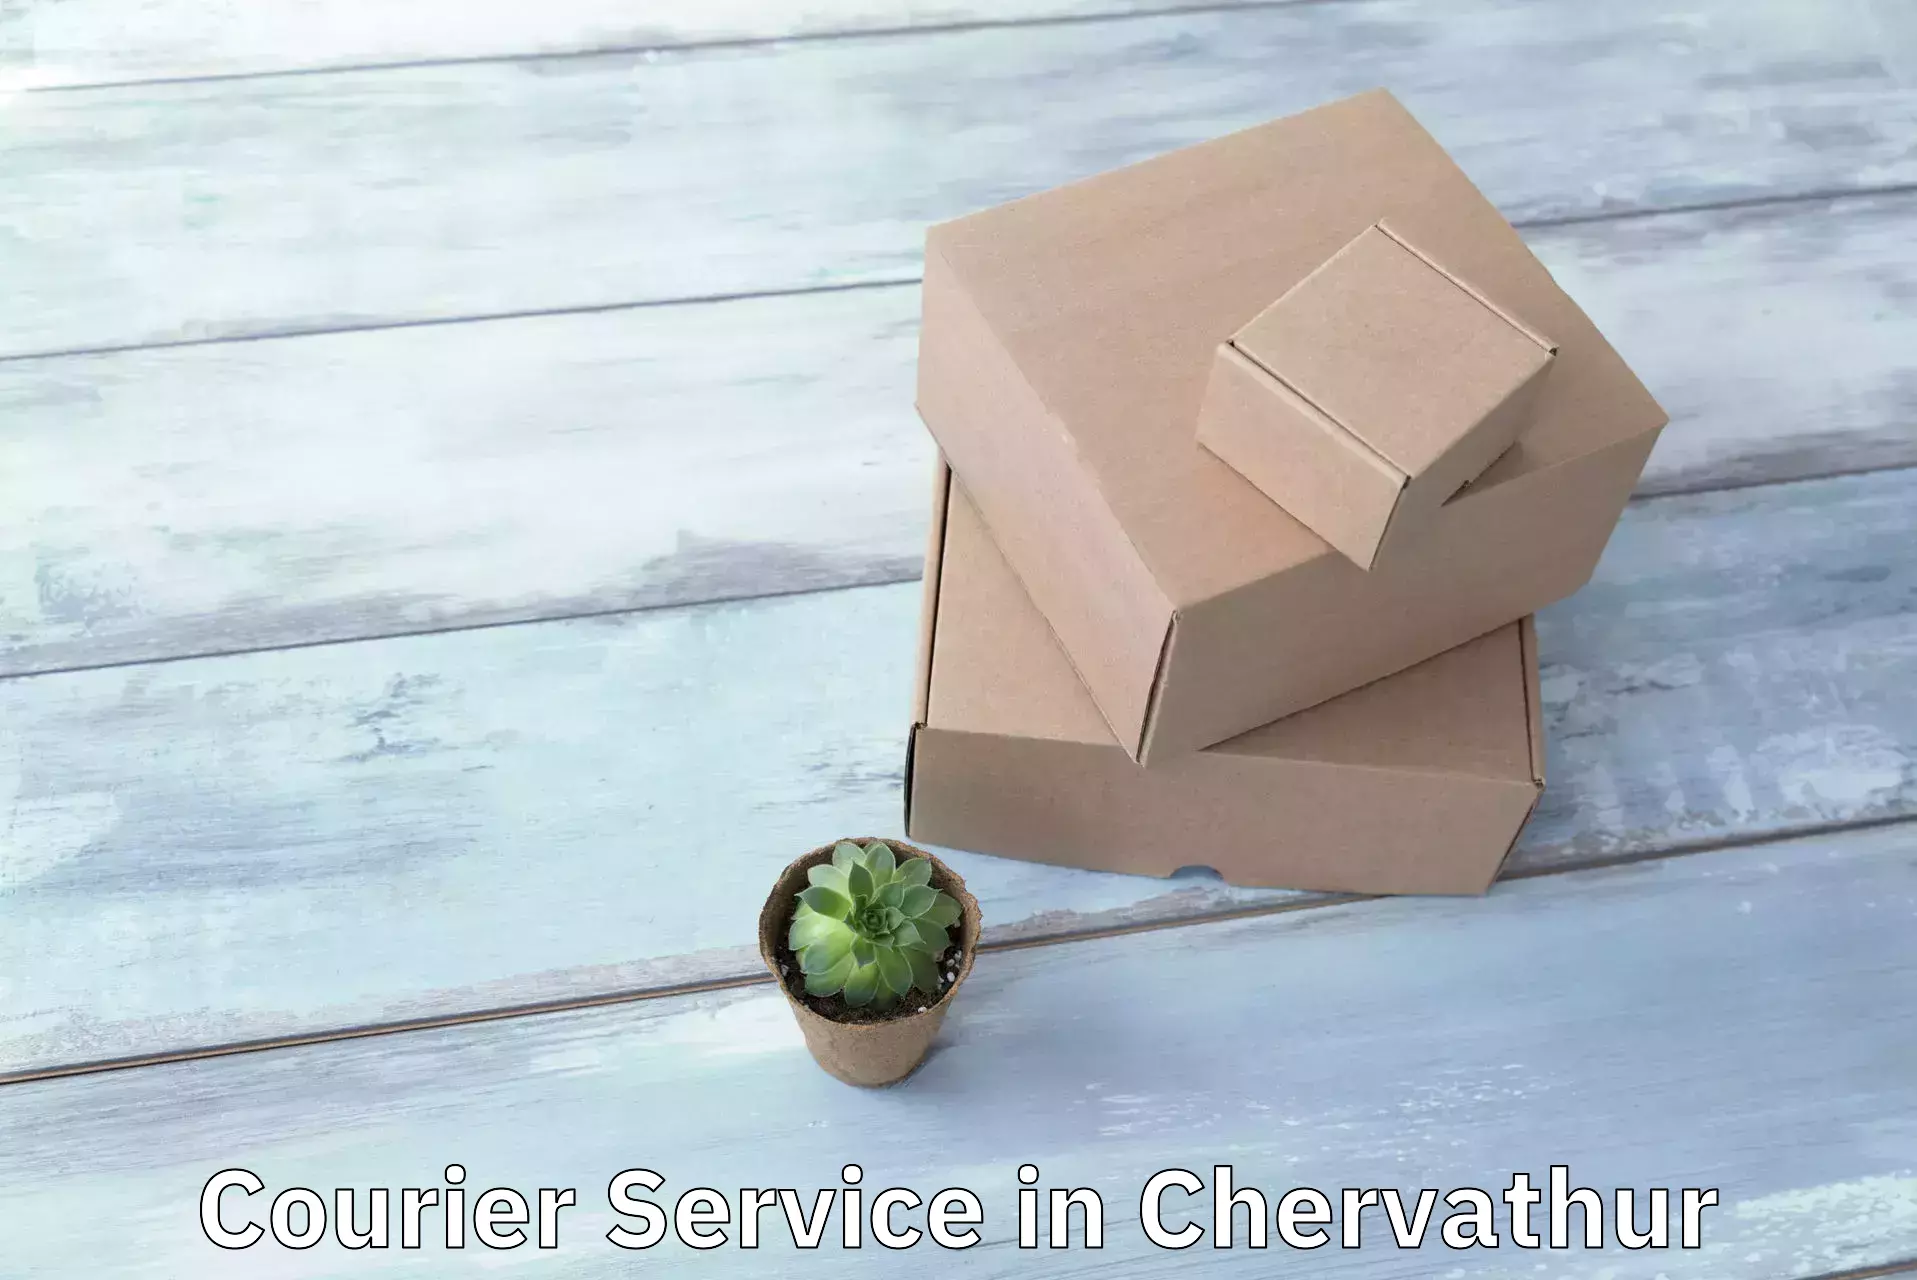 Custom logistics solutions in Chervathur